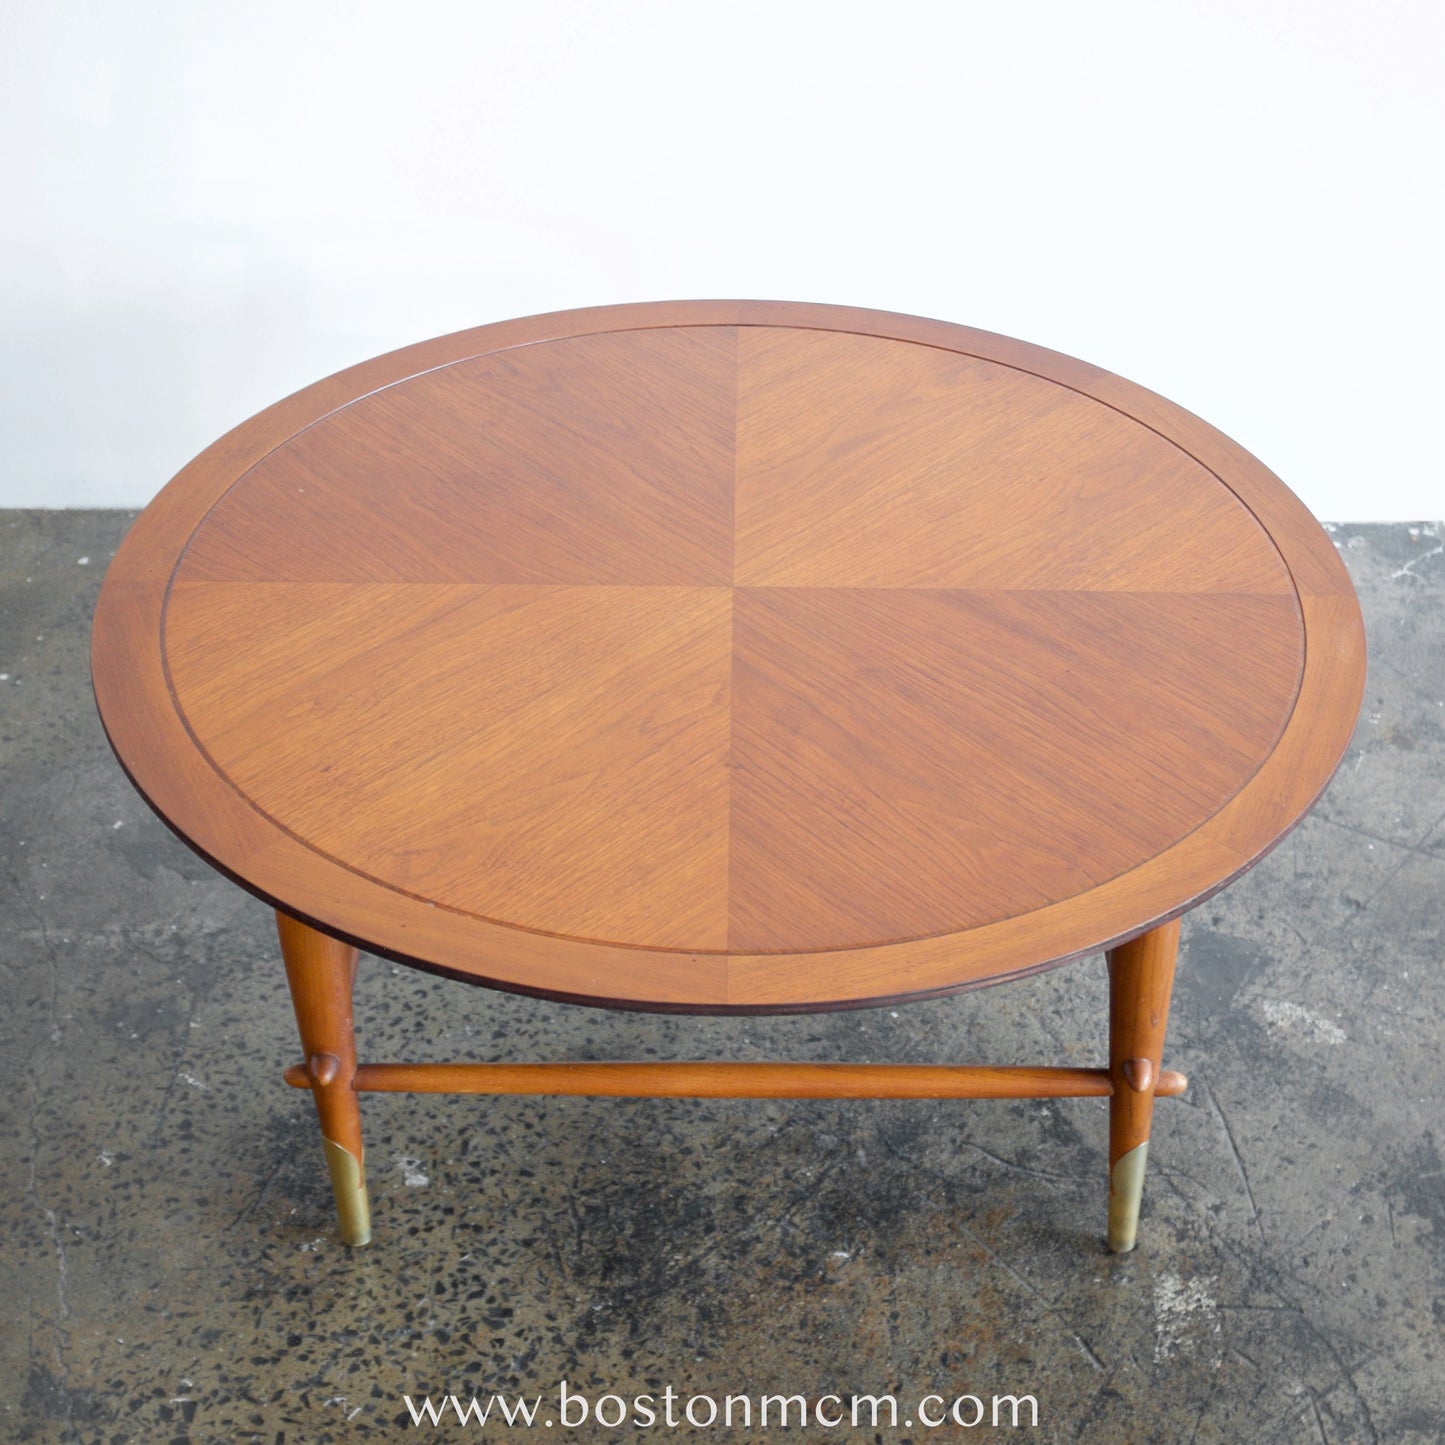 Lane Furniture "Copenhagen" Round Coffee Table